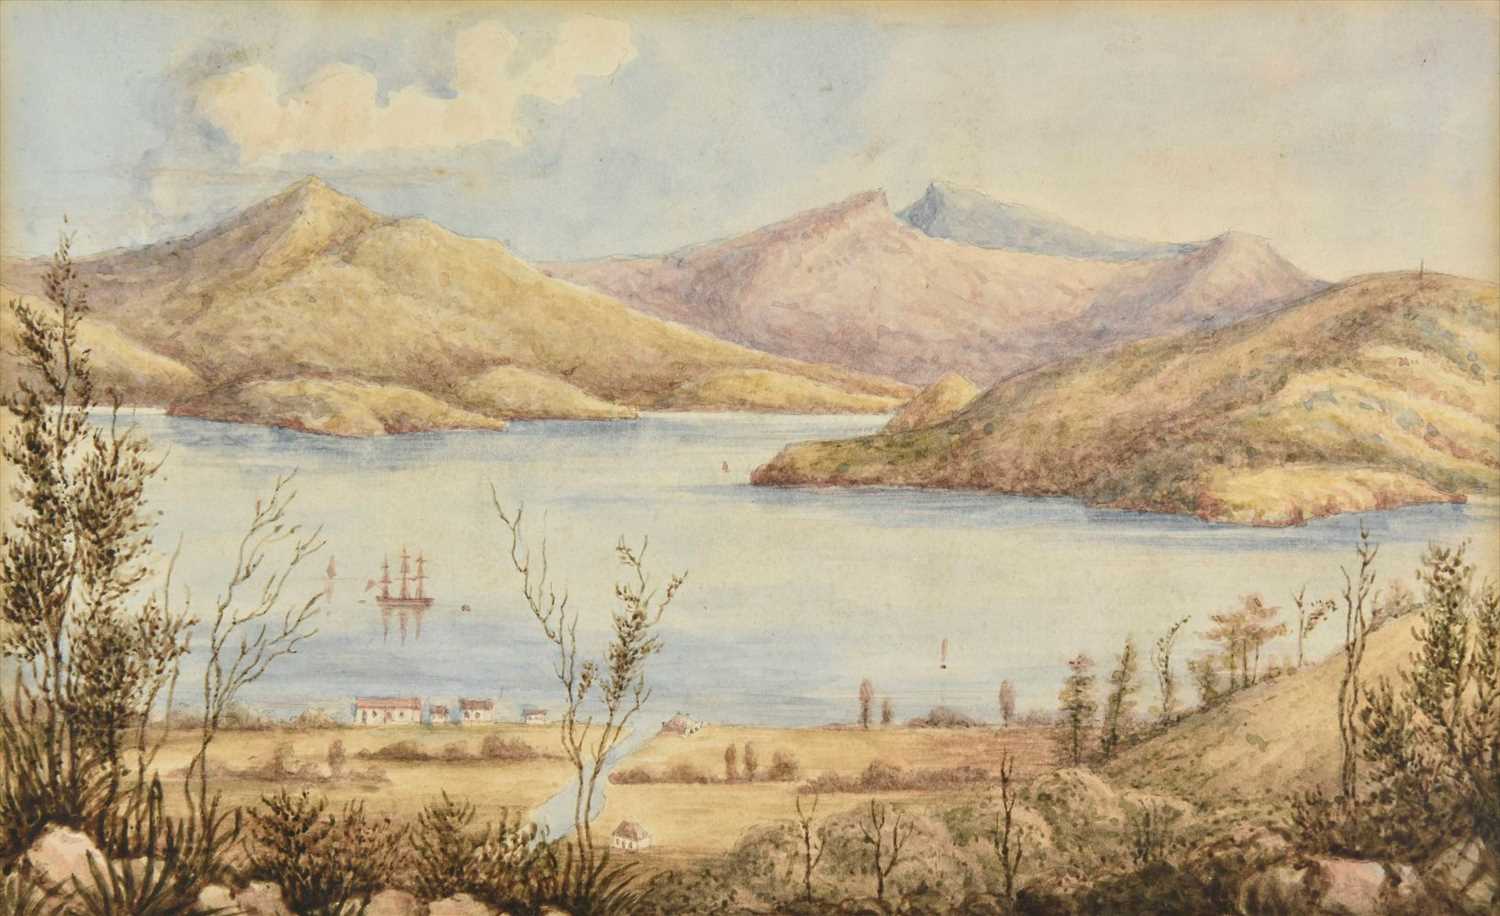 Lot 26 - New Zealand. Akaroa, Canterbury, circa 1850